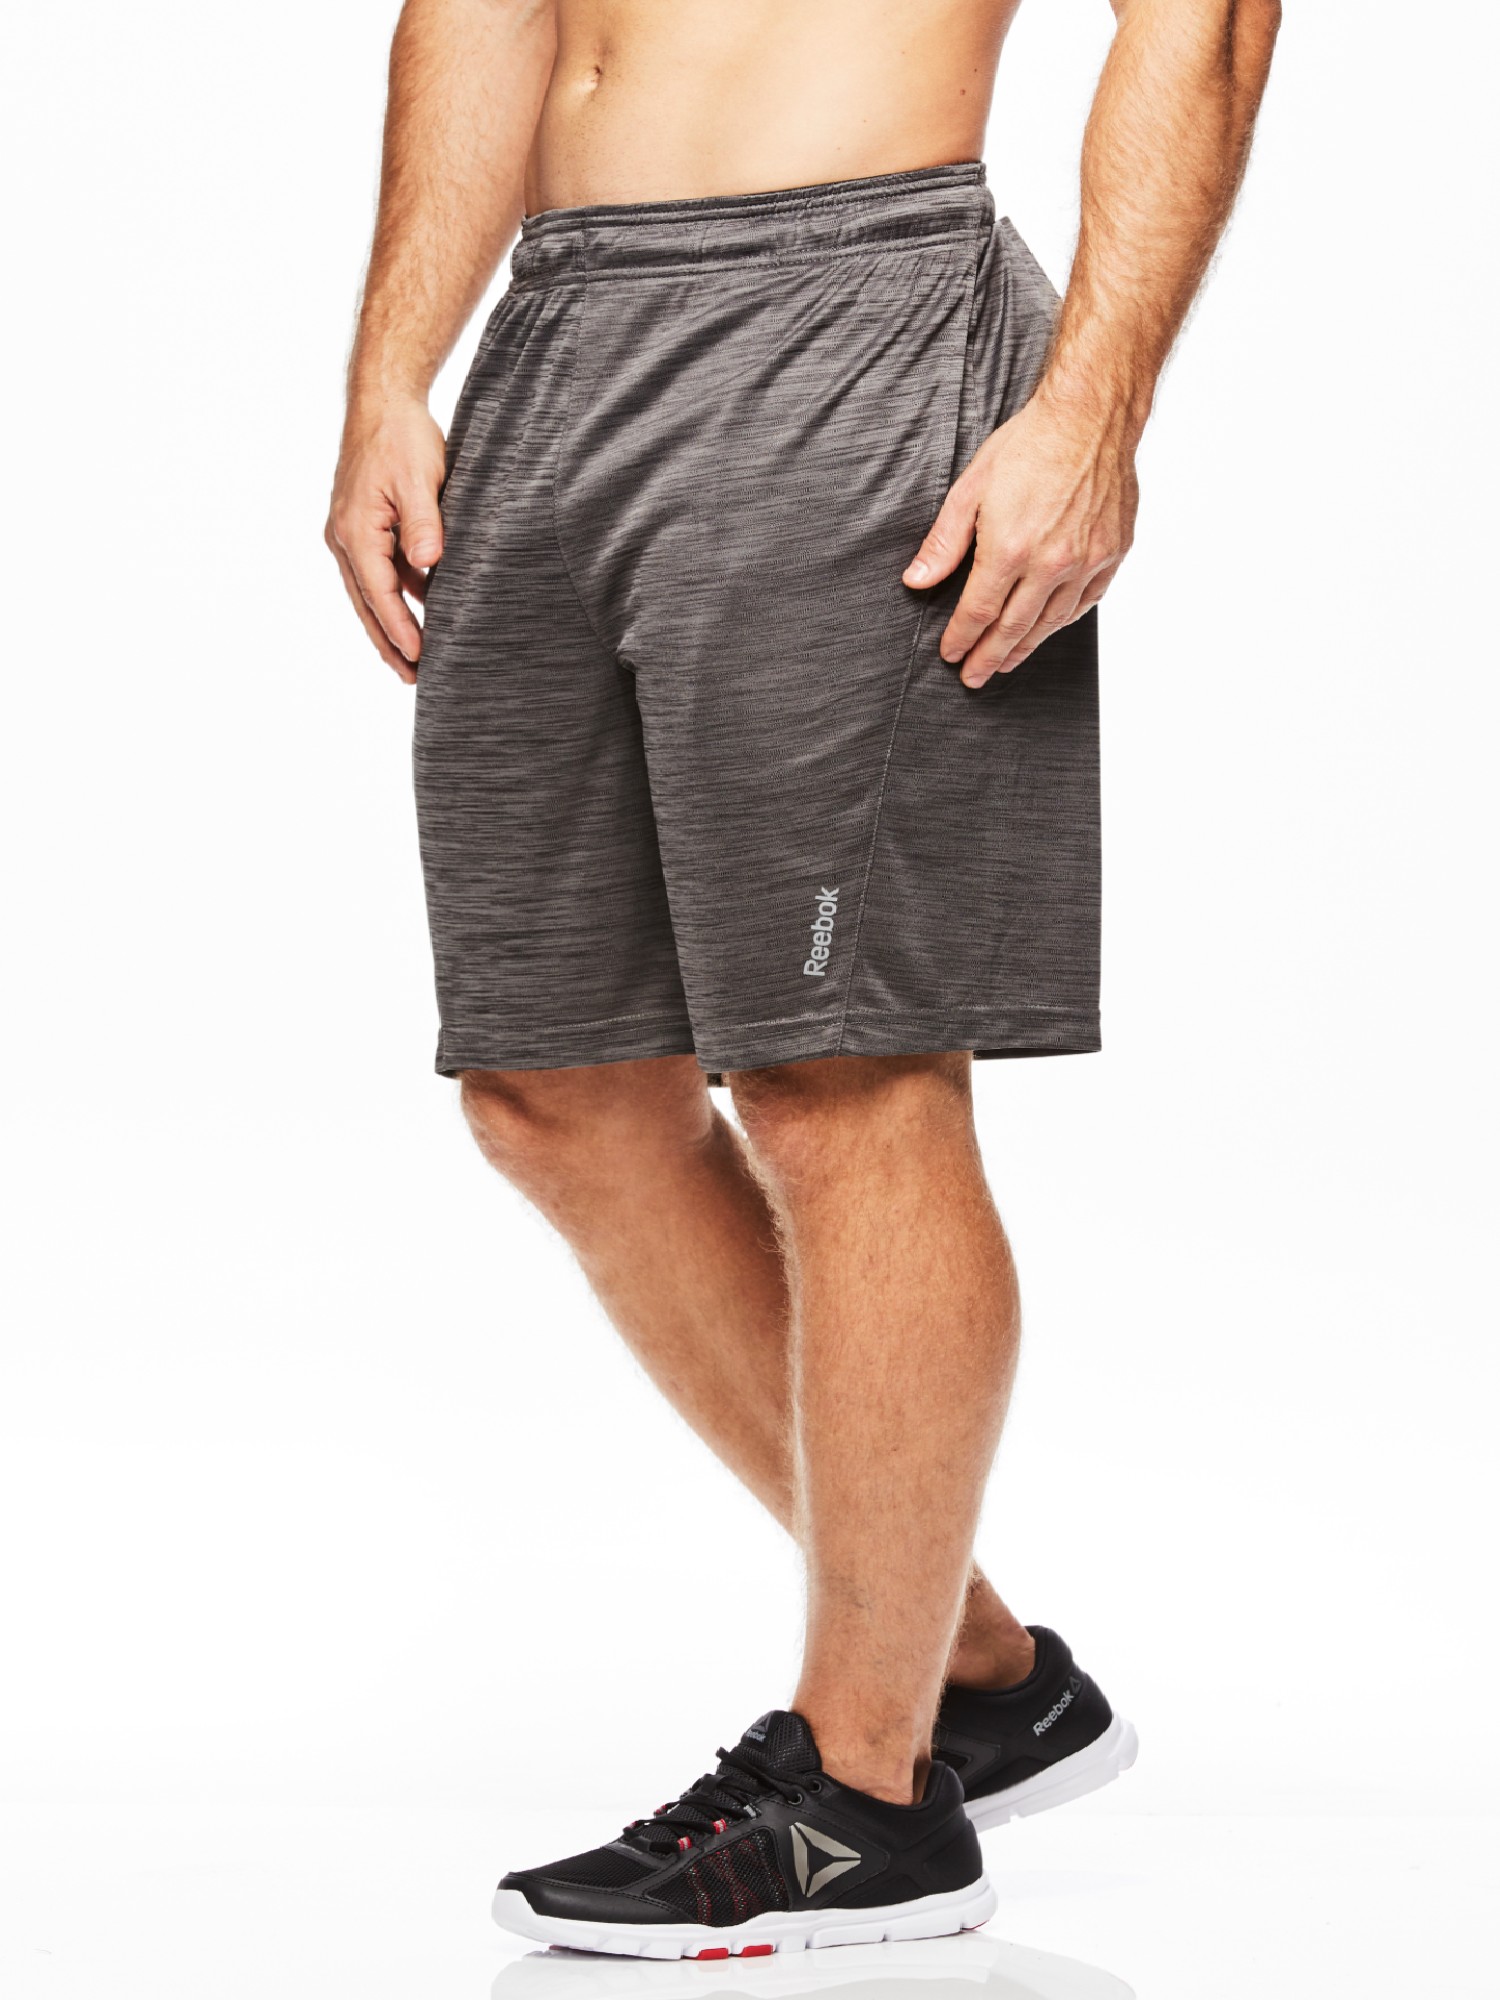 Reebok Men's 9" Cruz Athletic Shorts - image 2 of 4